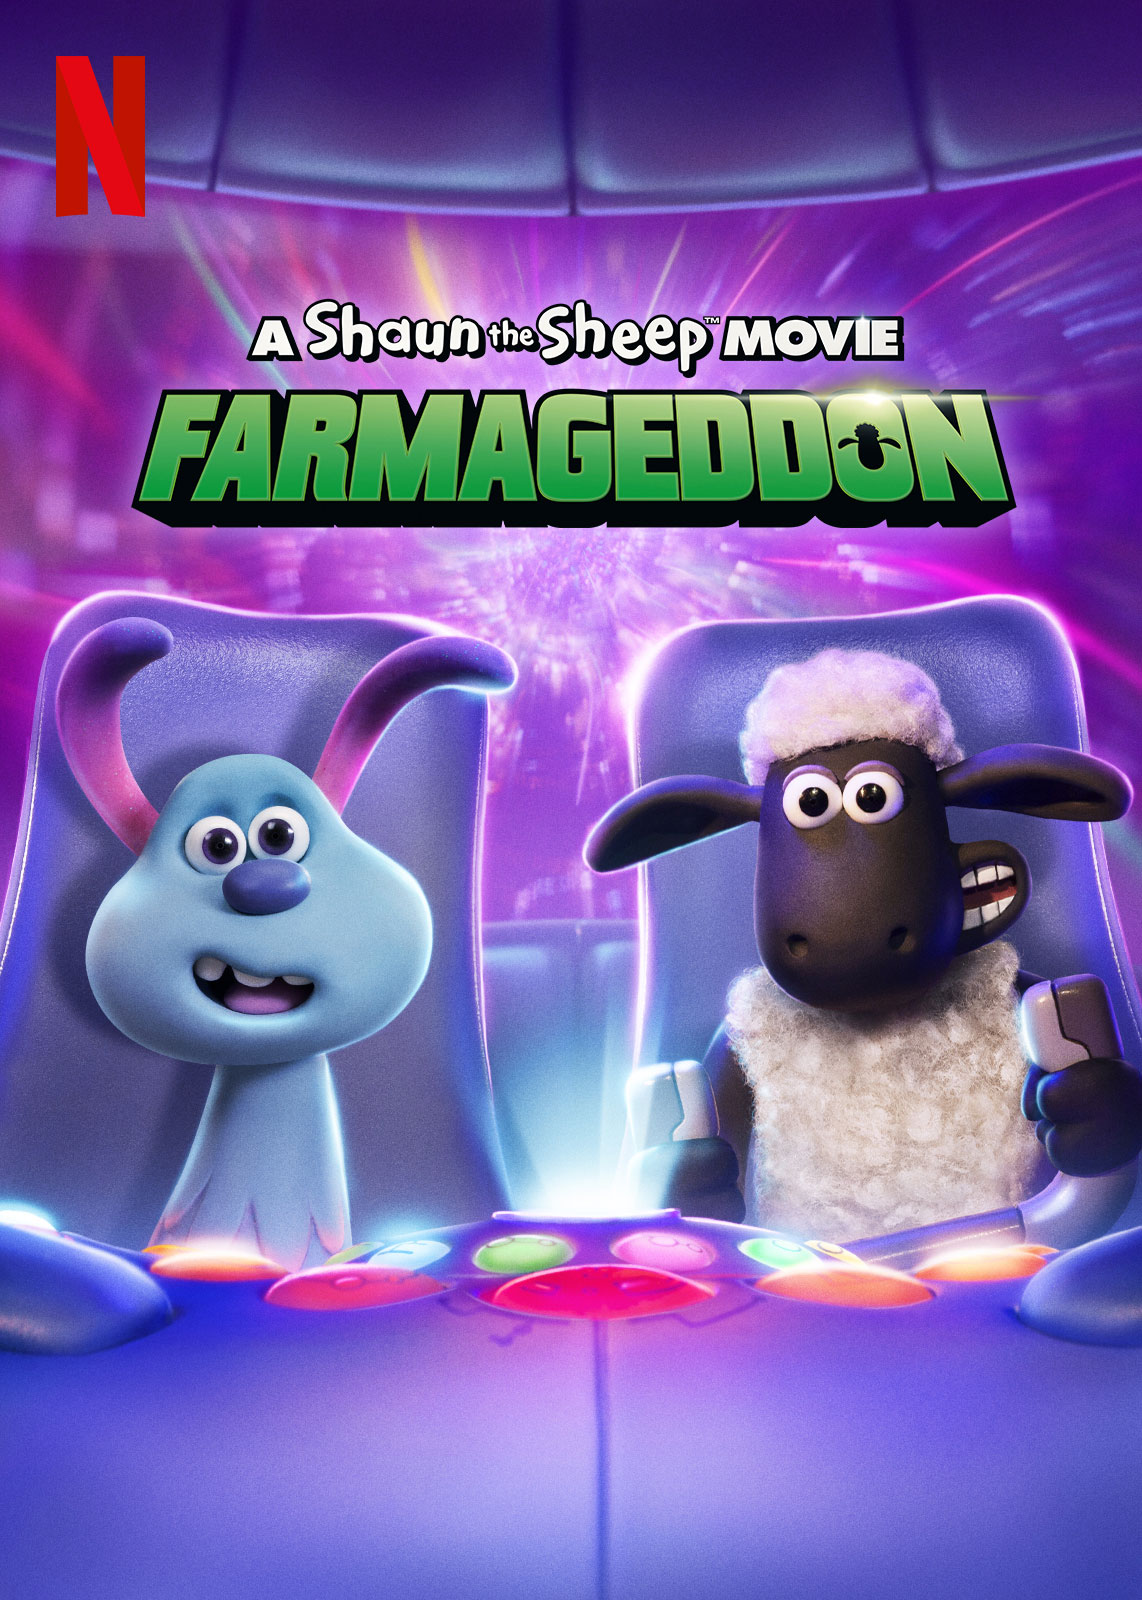 A Shaun the Sheep Movie: Farmageddon | Netflix VDA Concept, Finishing & Illustration